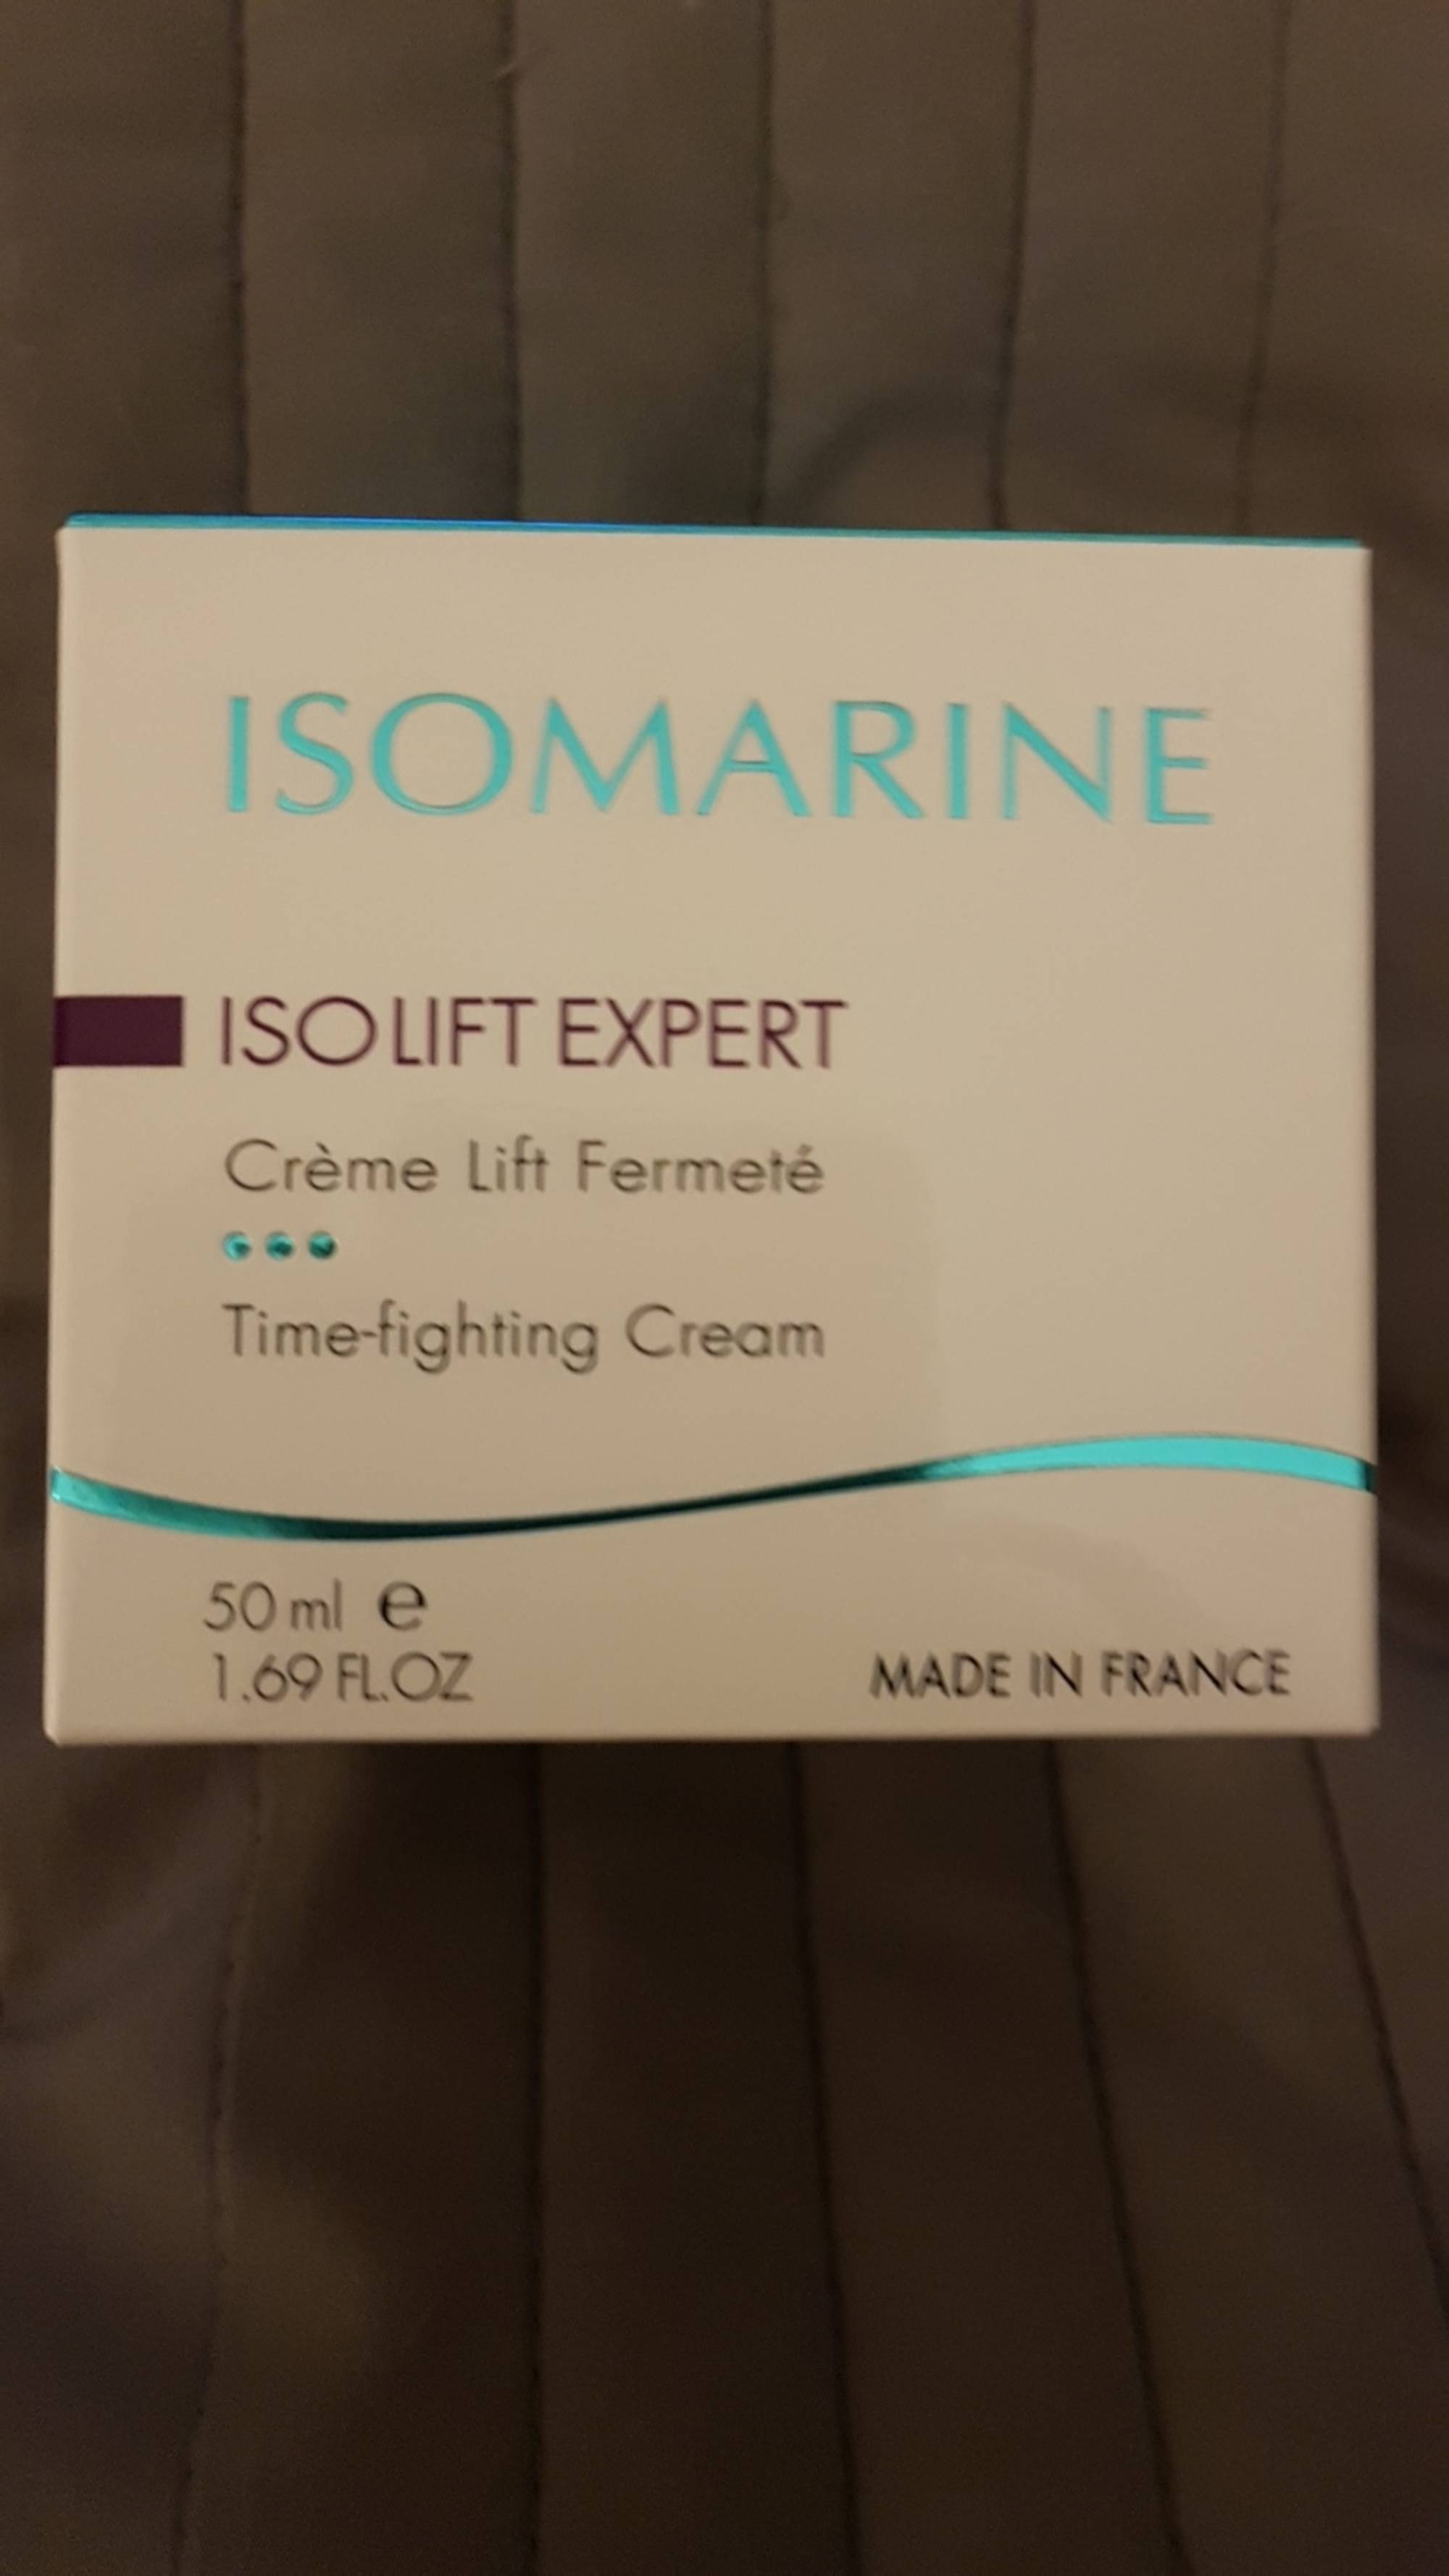 ISOMARINE - Isolift expert - Crème lift fermeté